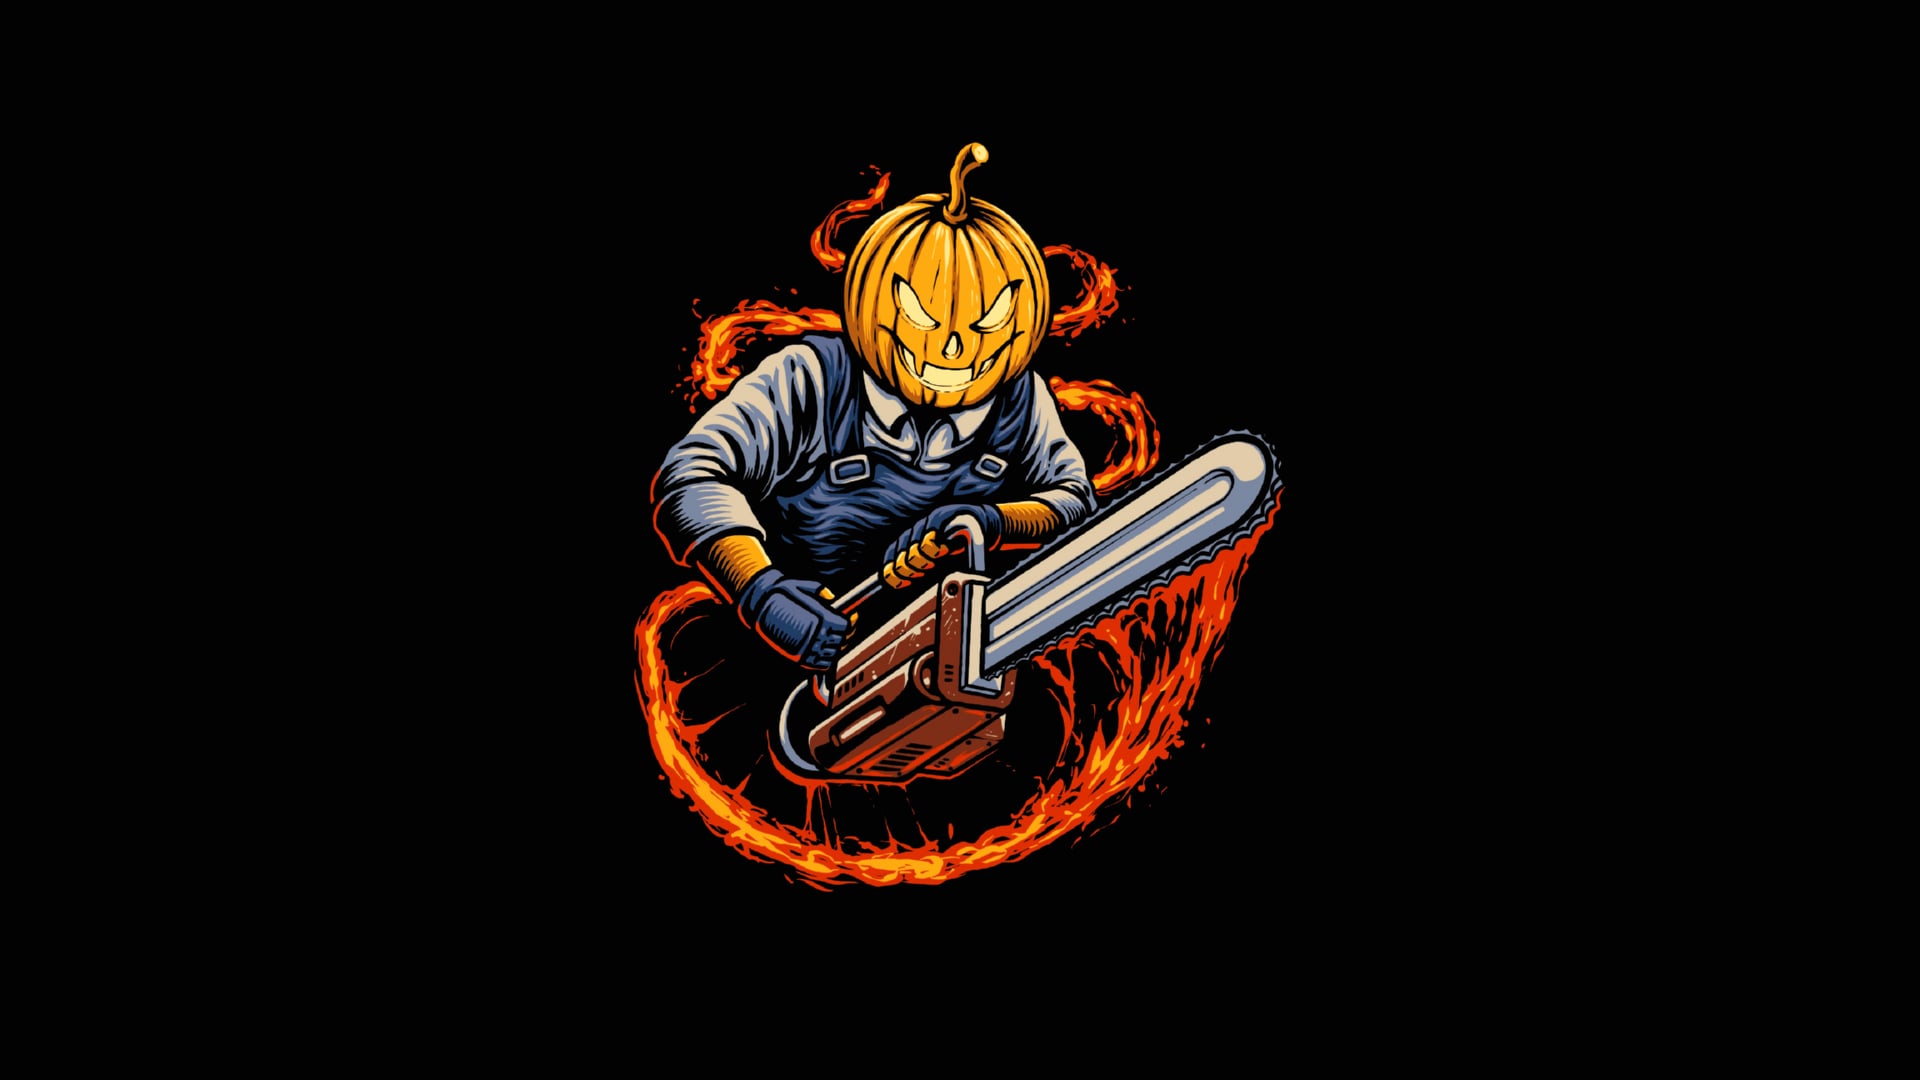 Digital Art Halloween Pumpkin at 640 x 1136 iPhone 5 size wallpapers HD quality